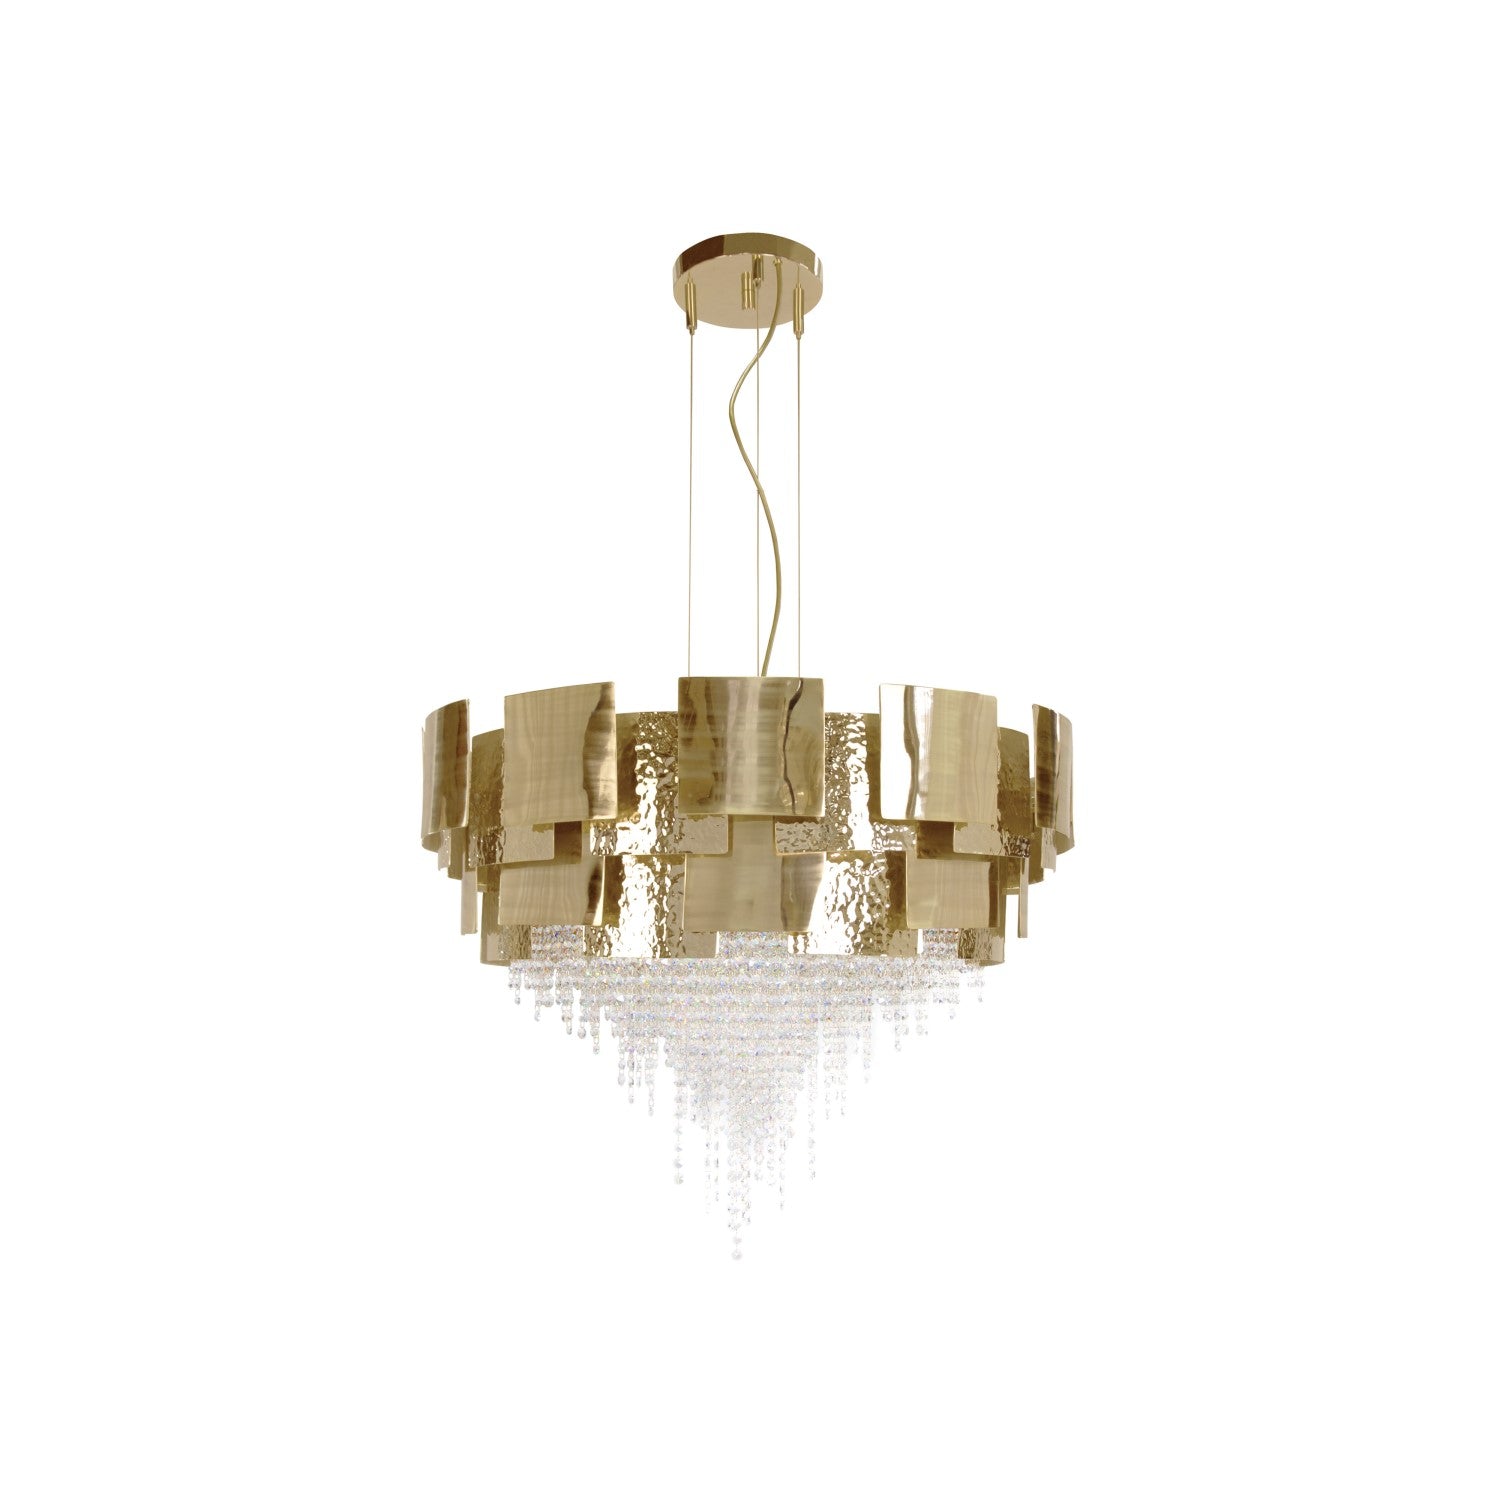 Castro-Lighting-Mondrian-9180-80-gold-finish-swarovski-crystals-web